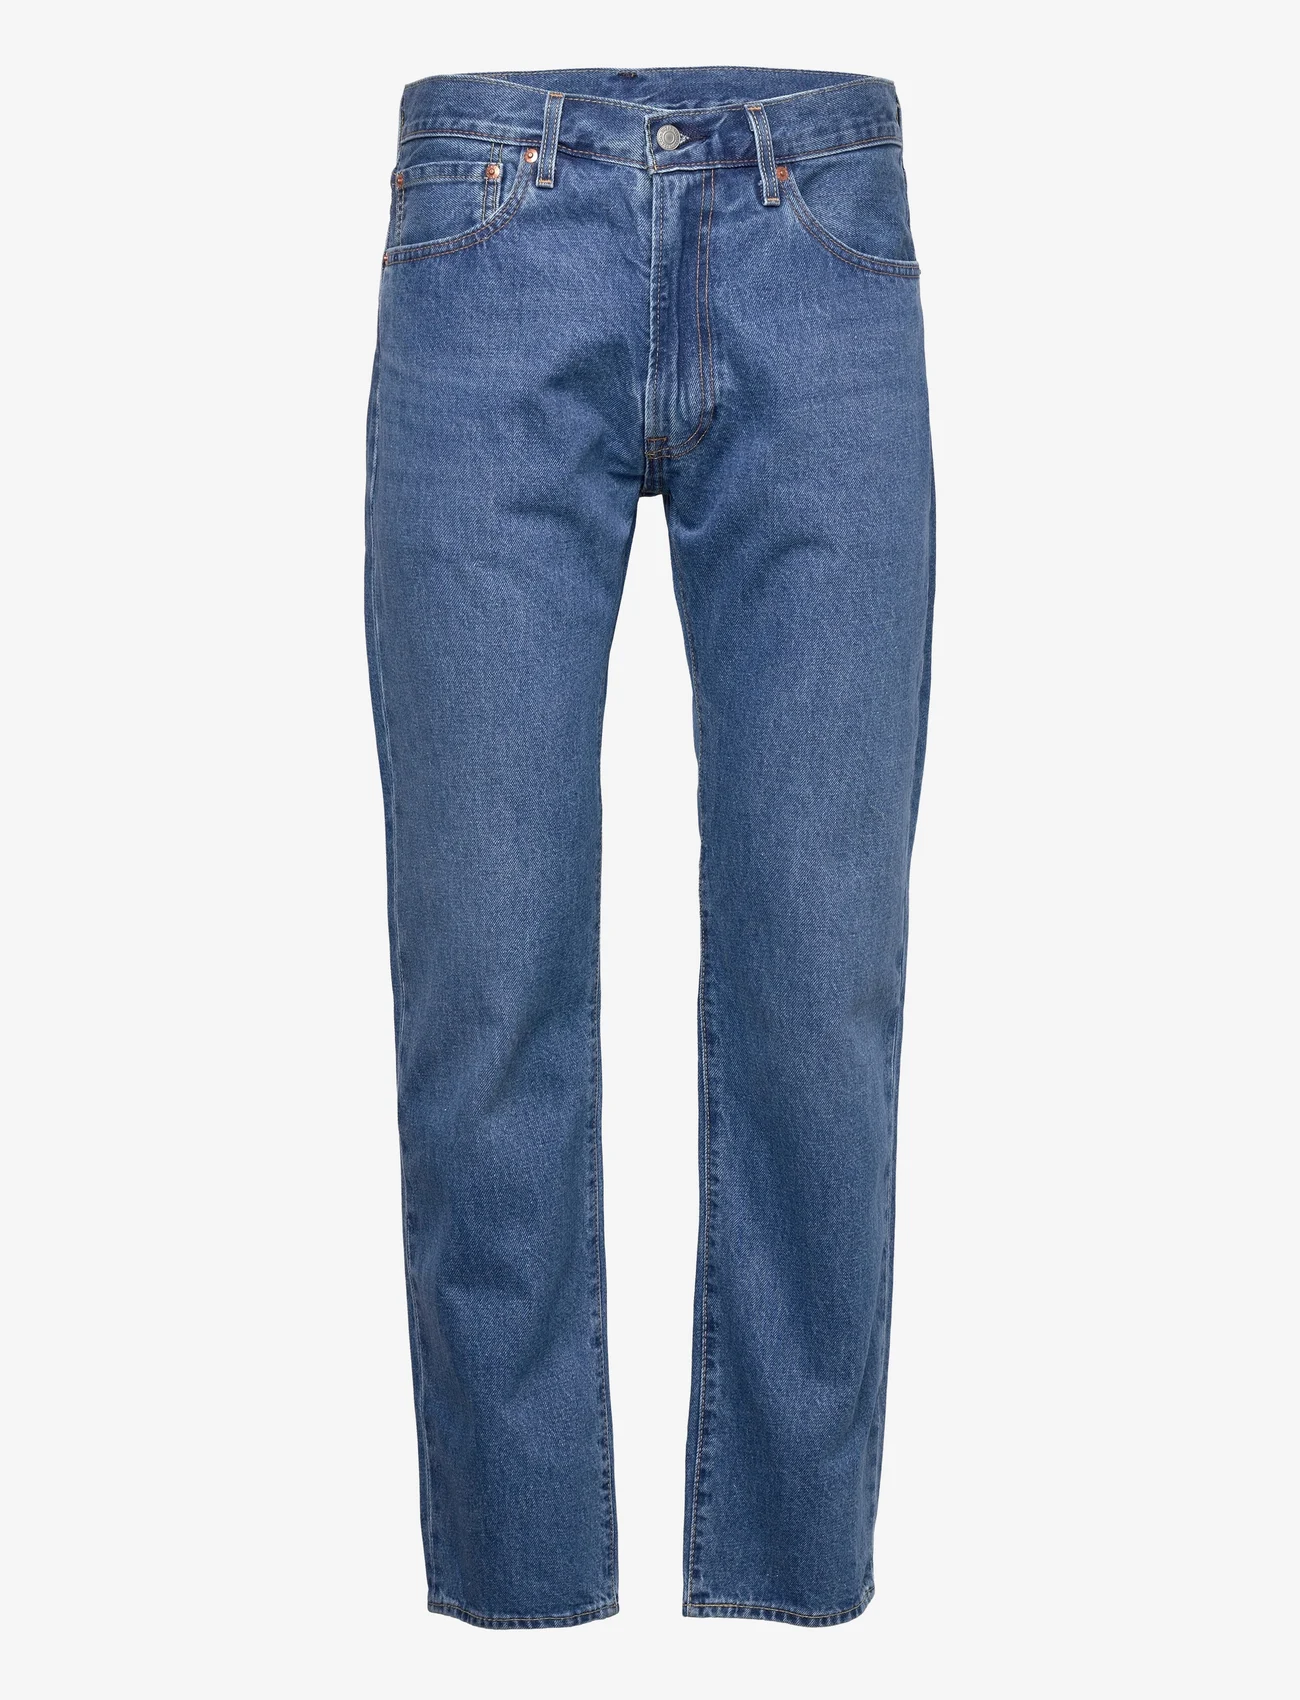 LEVI´S Men - 551Z AUTHENTIC STRAIGHT EXPRES - regular jeans - med indigo - flat finish - 0